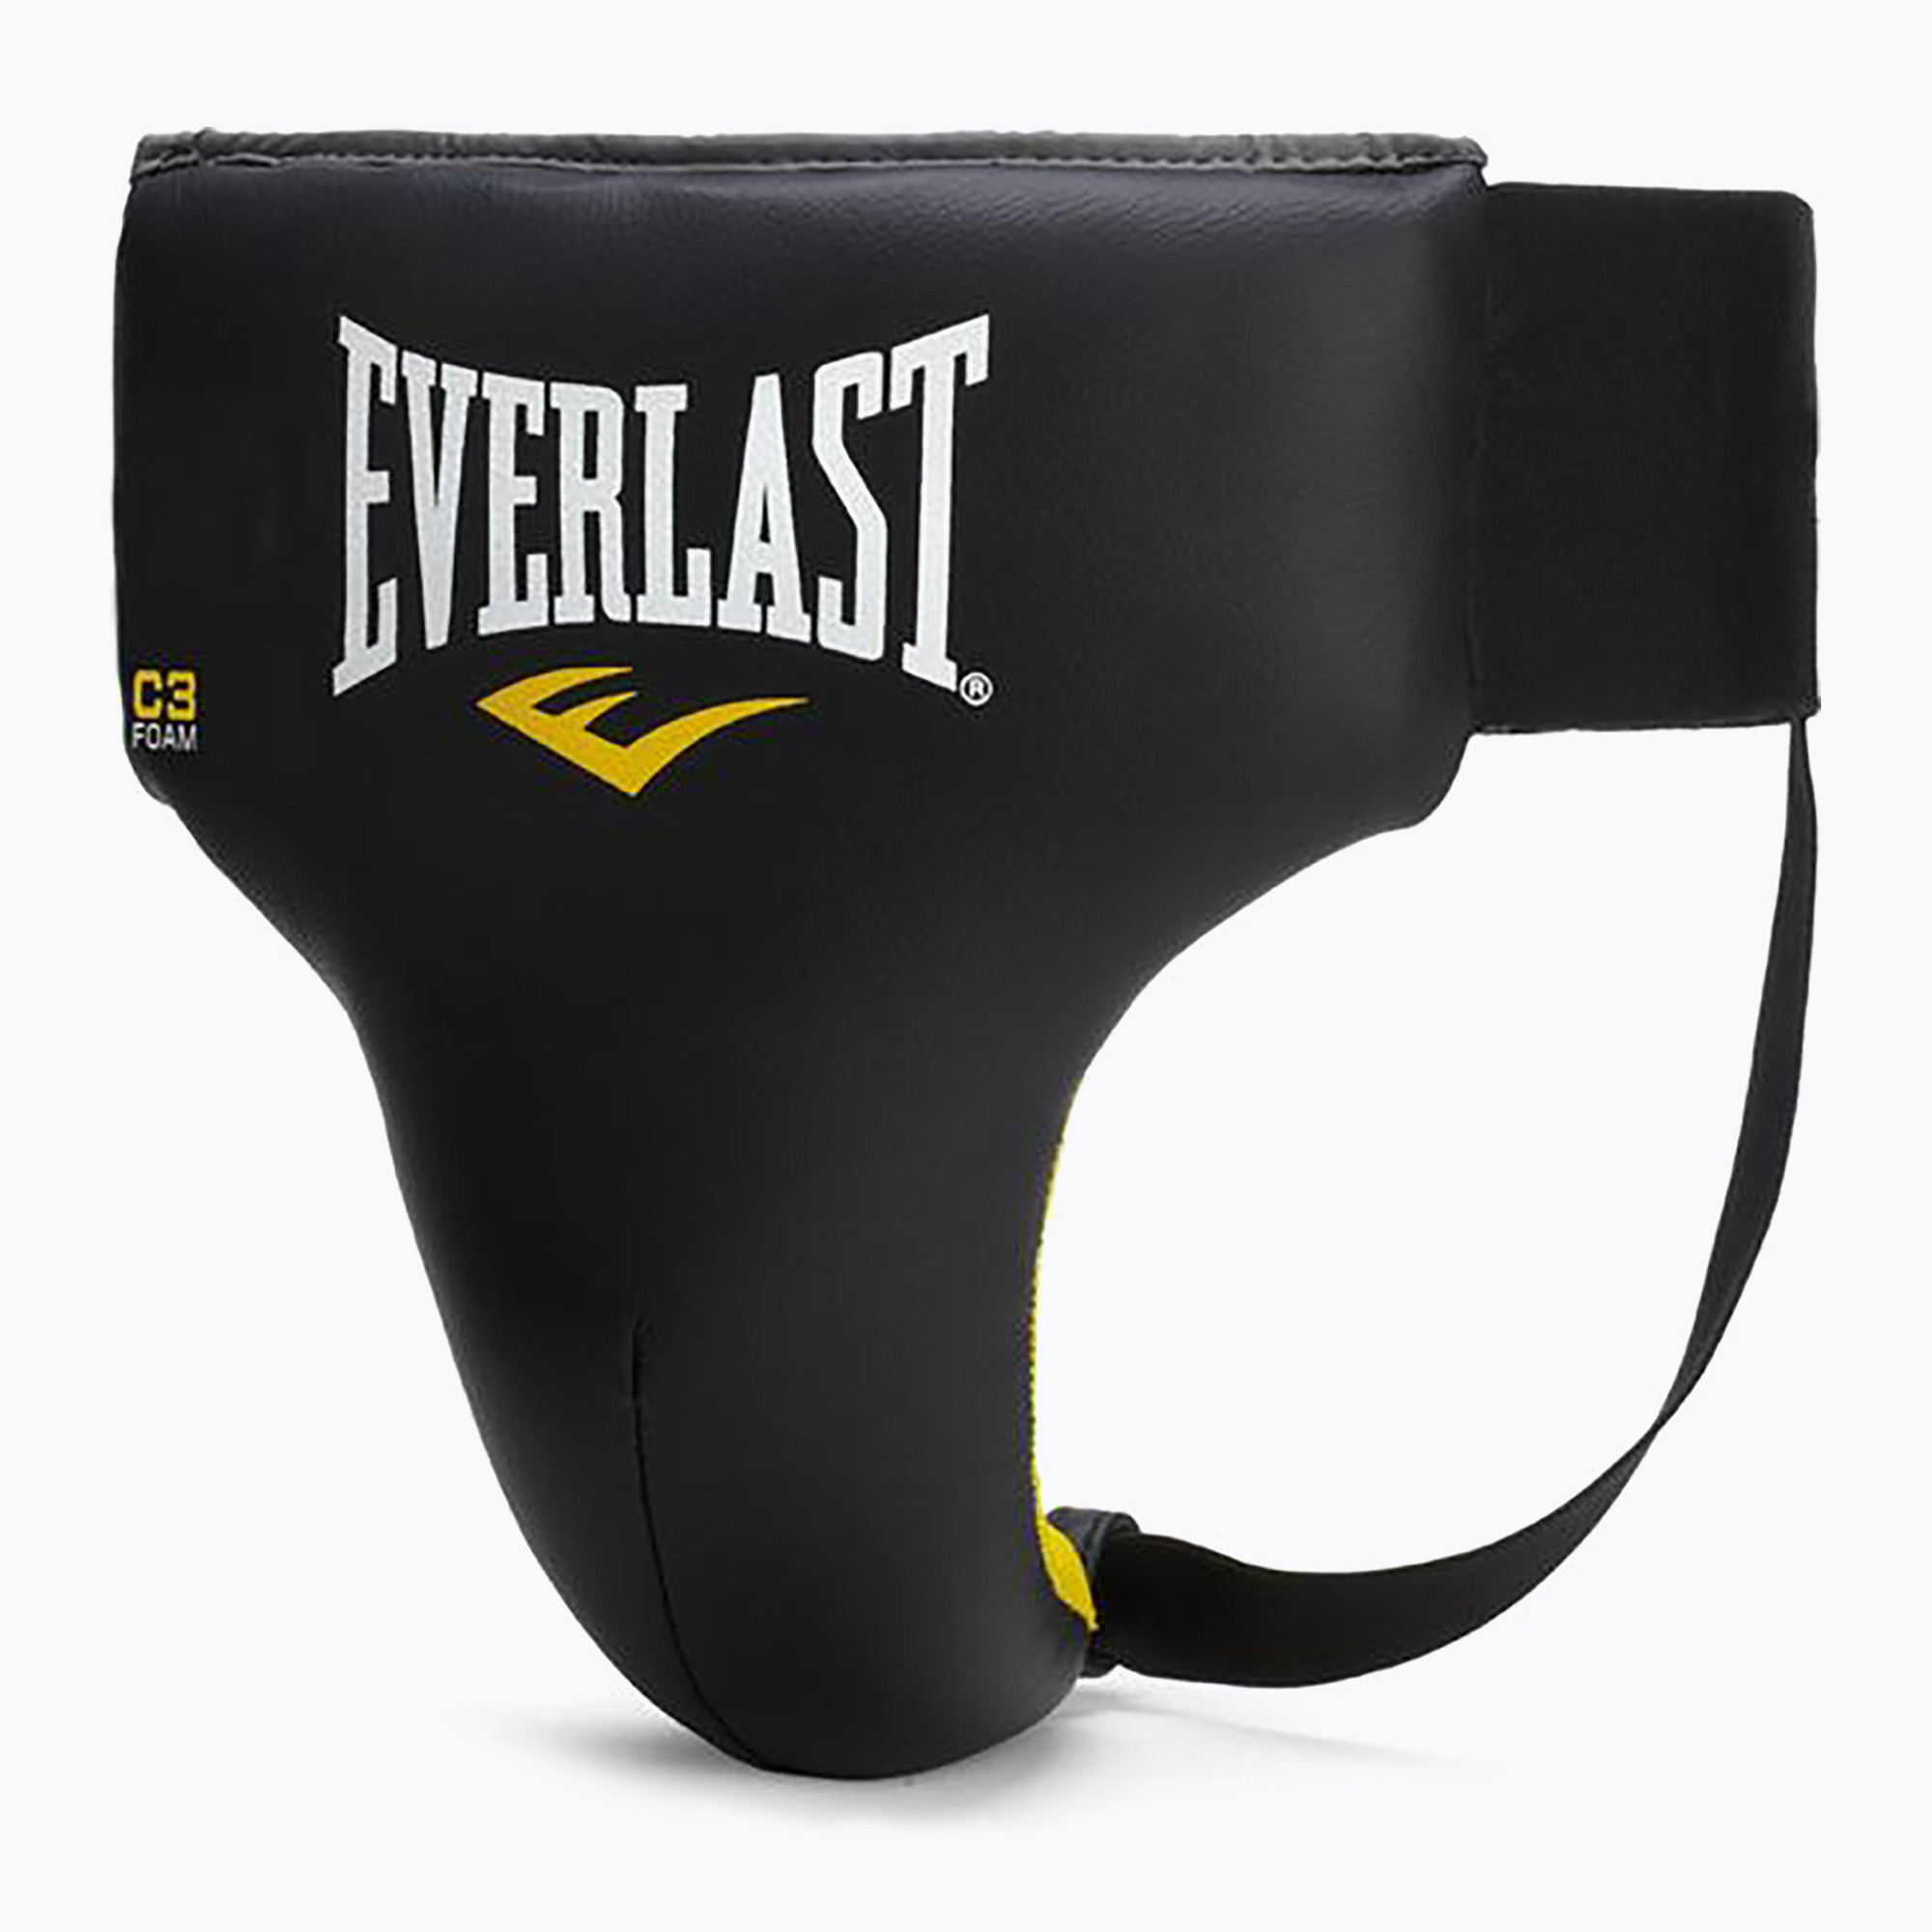 Everlast Lightweight Crotch Sparring Protector black за мъже